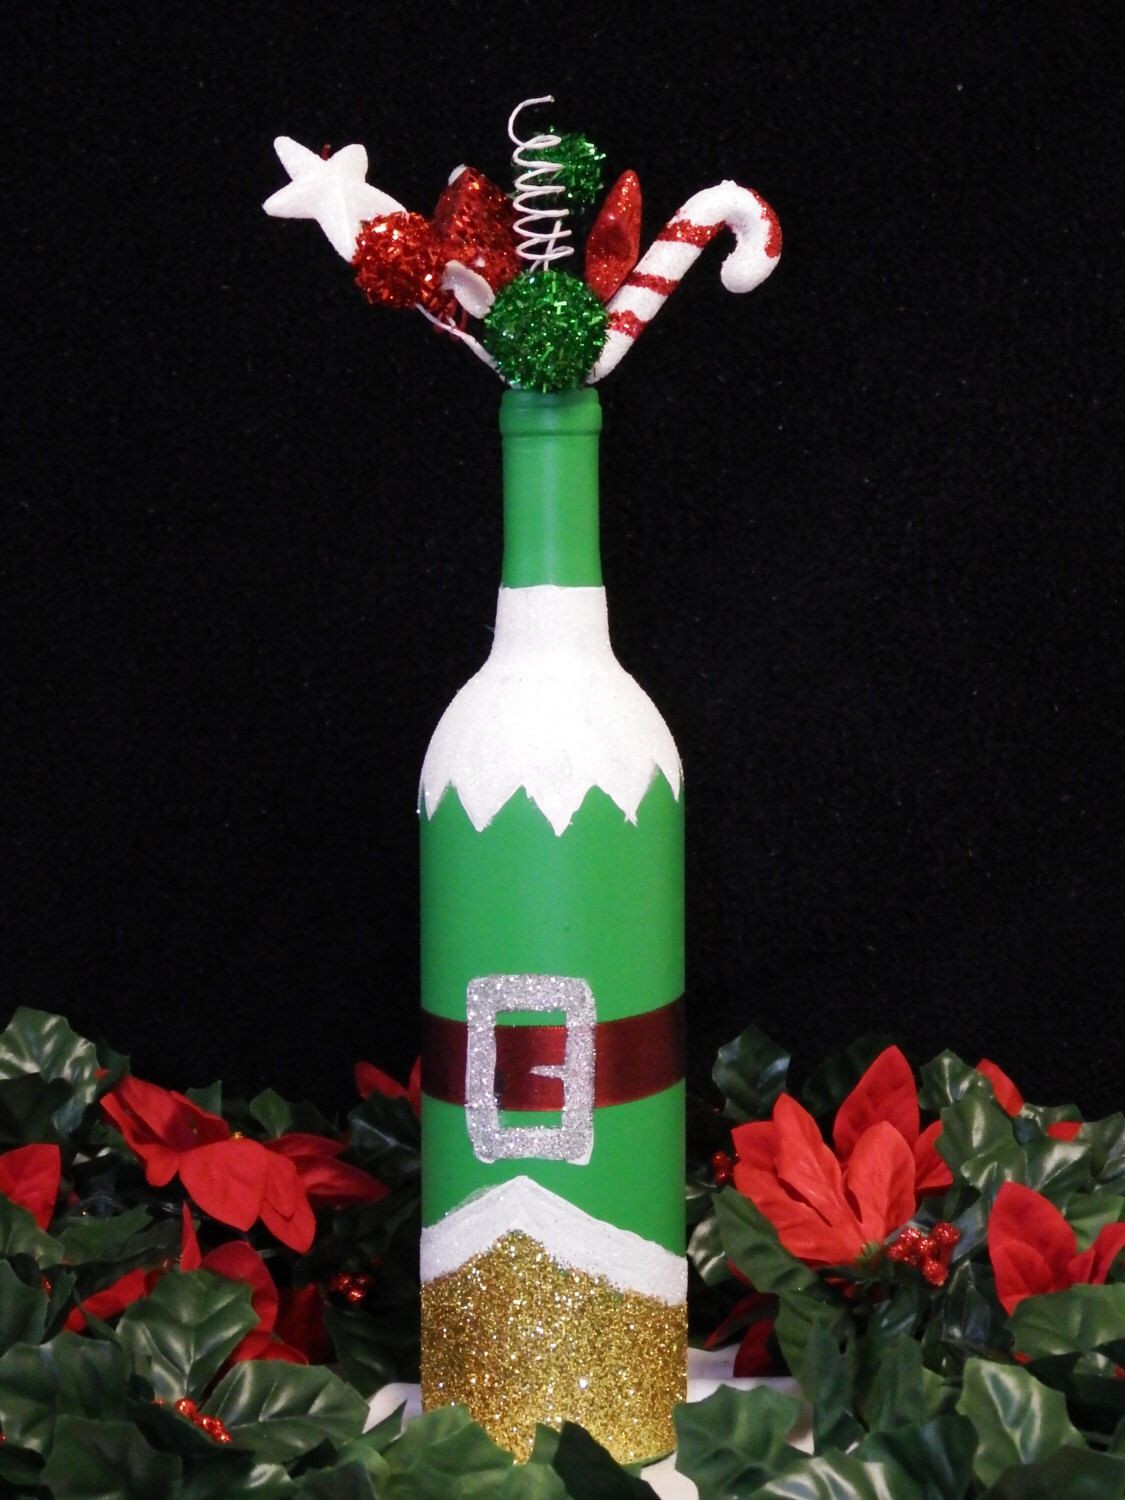 DIY Wine Bottle Christmas Decoration
 Elf Wine Bottle Christmas Decorations A personal favorite